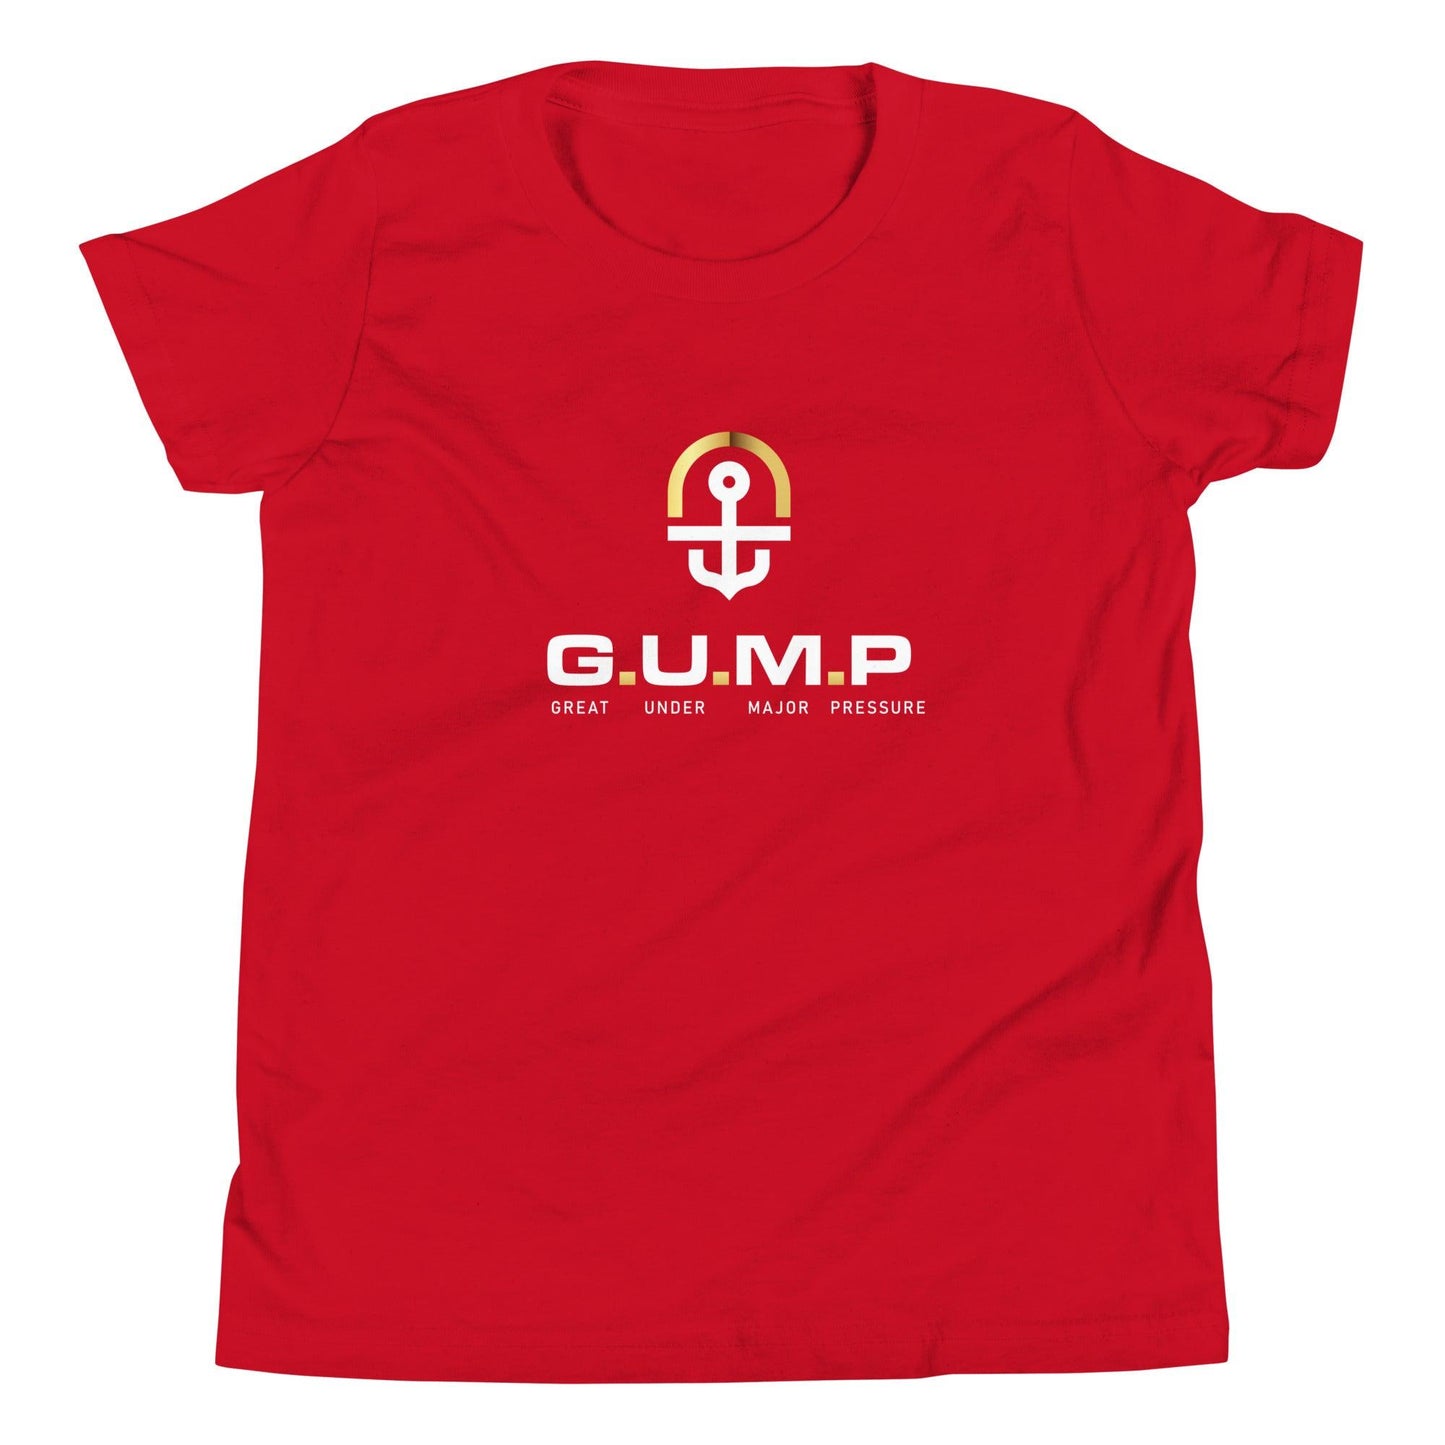 Calvin Russell III “GUMP” Youth T-Shirt - Fan Arch